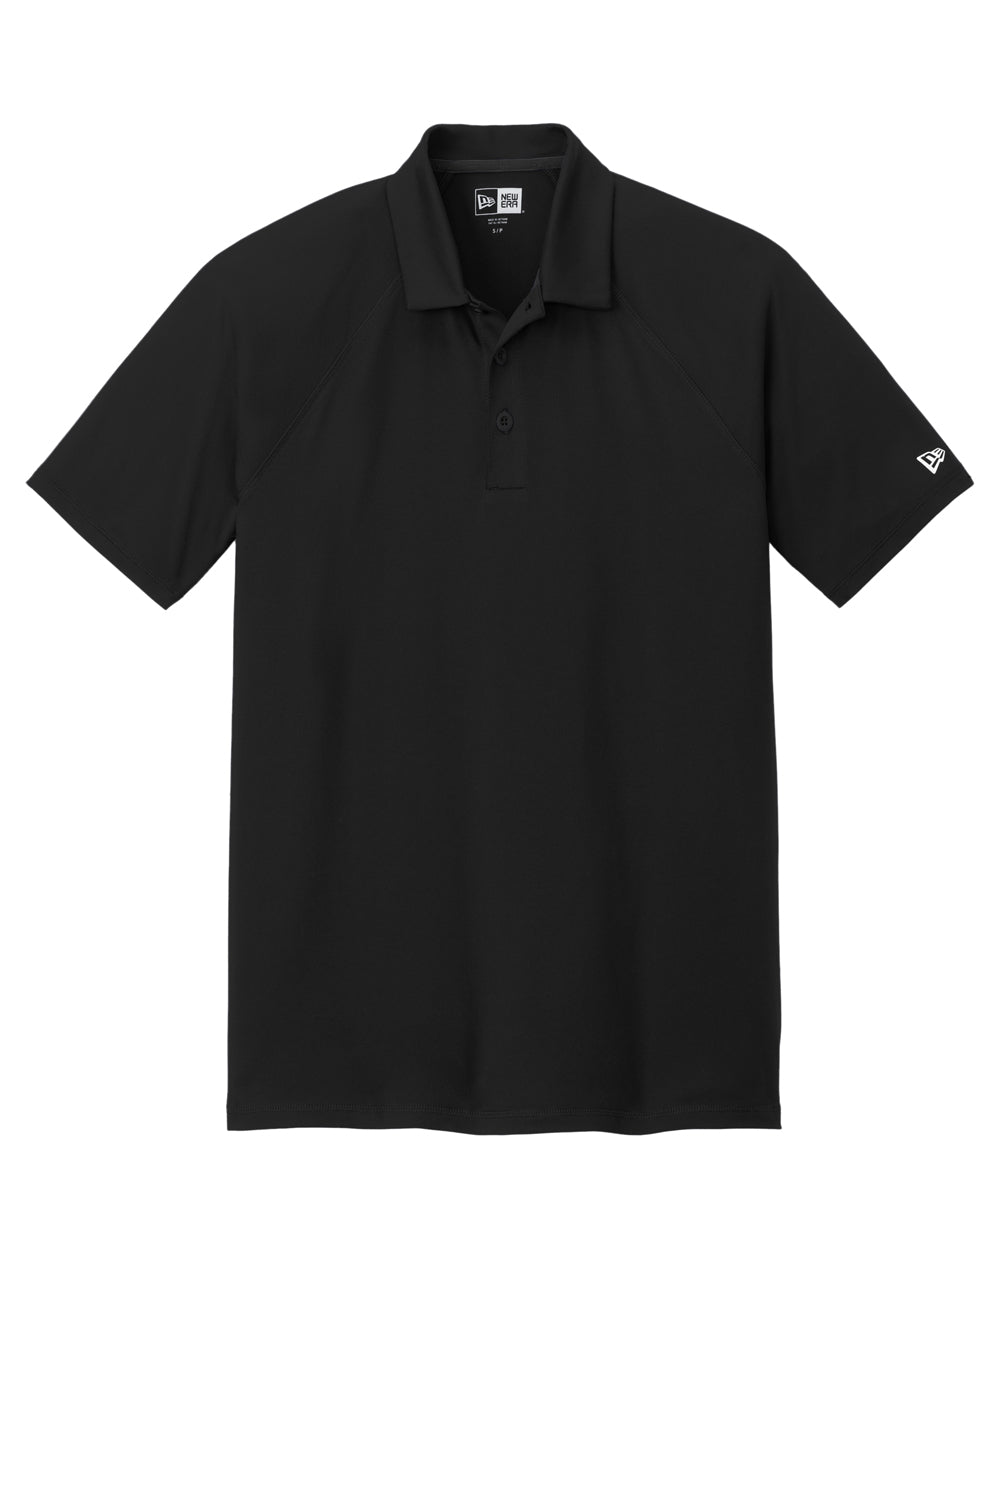 New Era Mens Power Short Sleeve Polo Shirt Black Flat Front